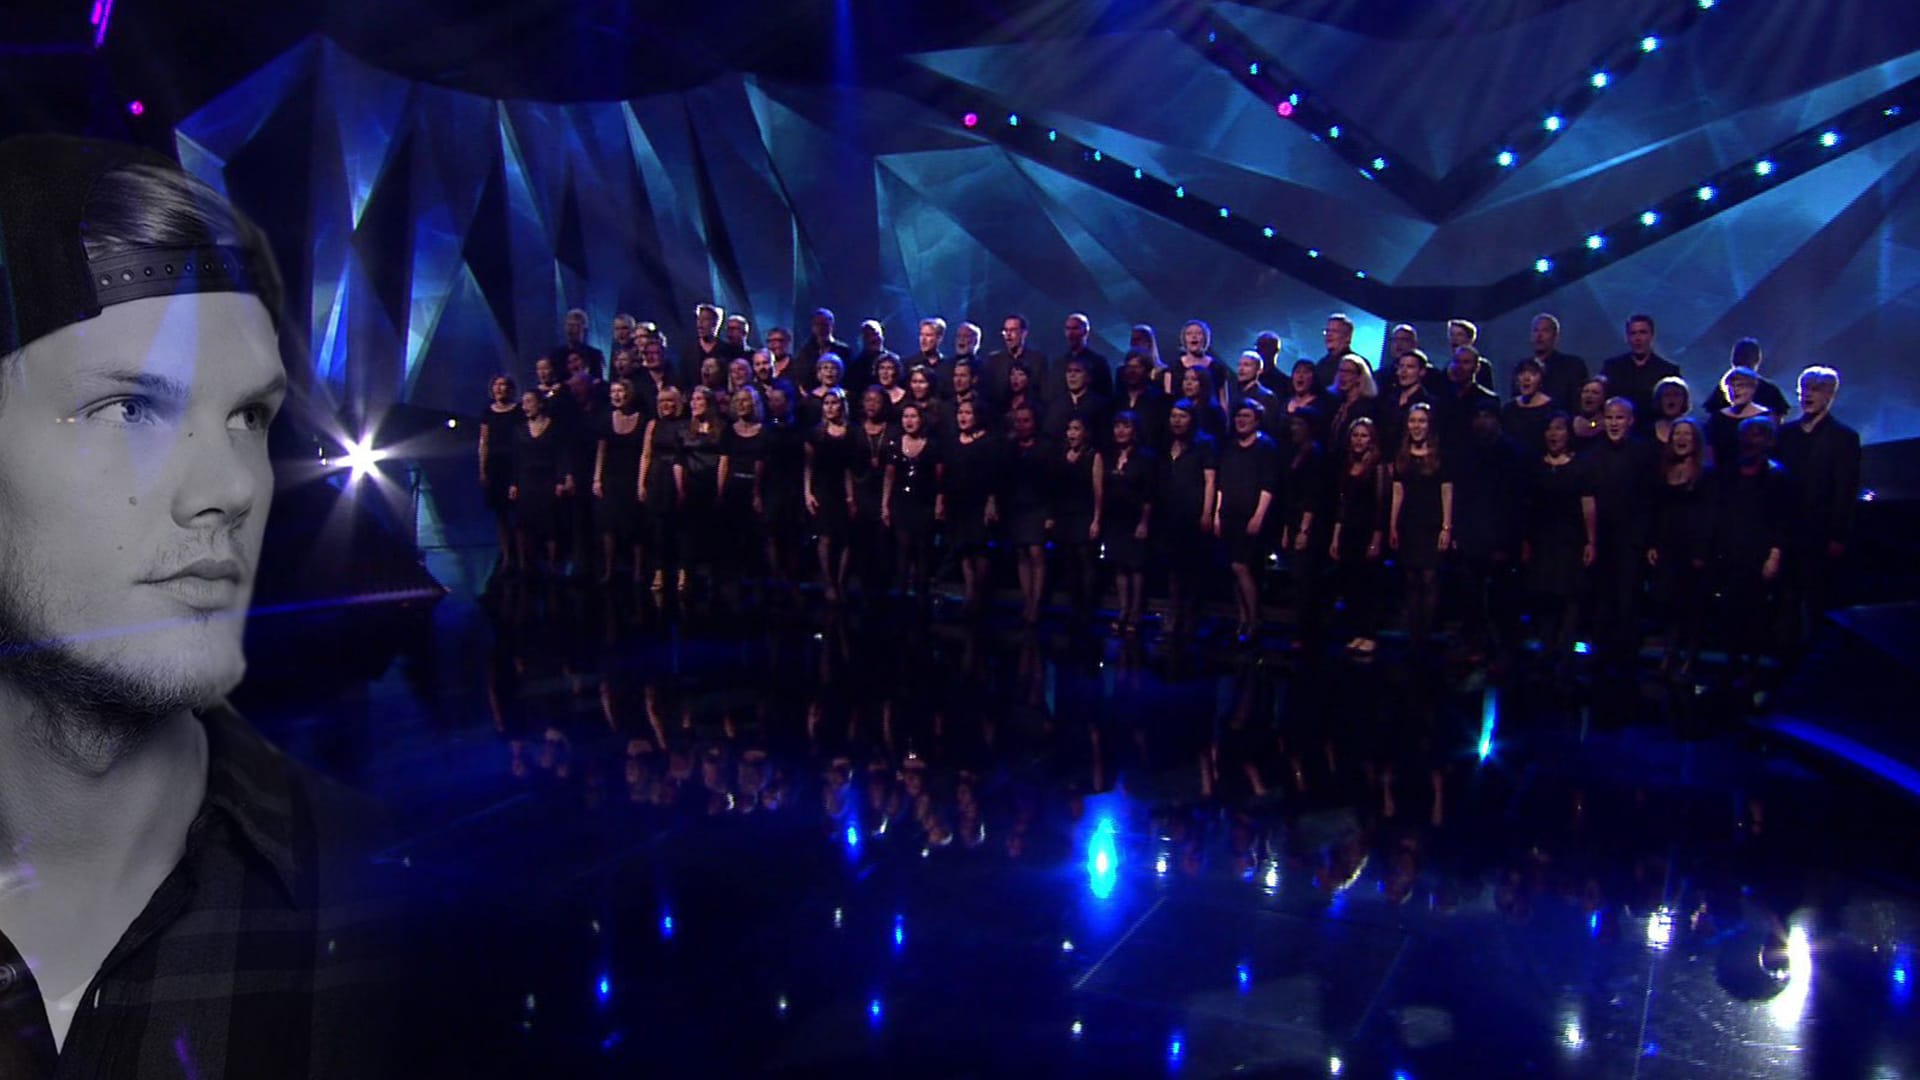 Eurovision Song Contest 2013 - We Write The Story - Choir & Avicii